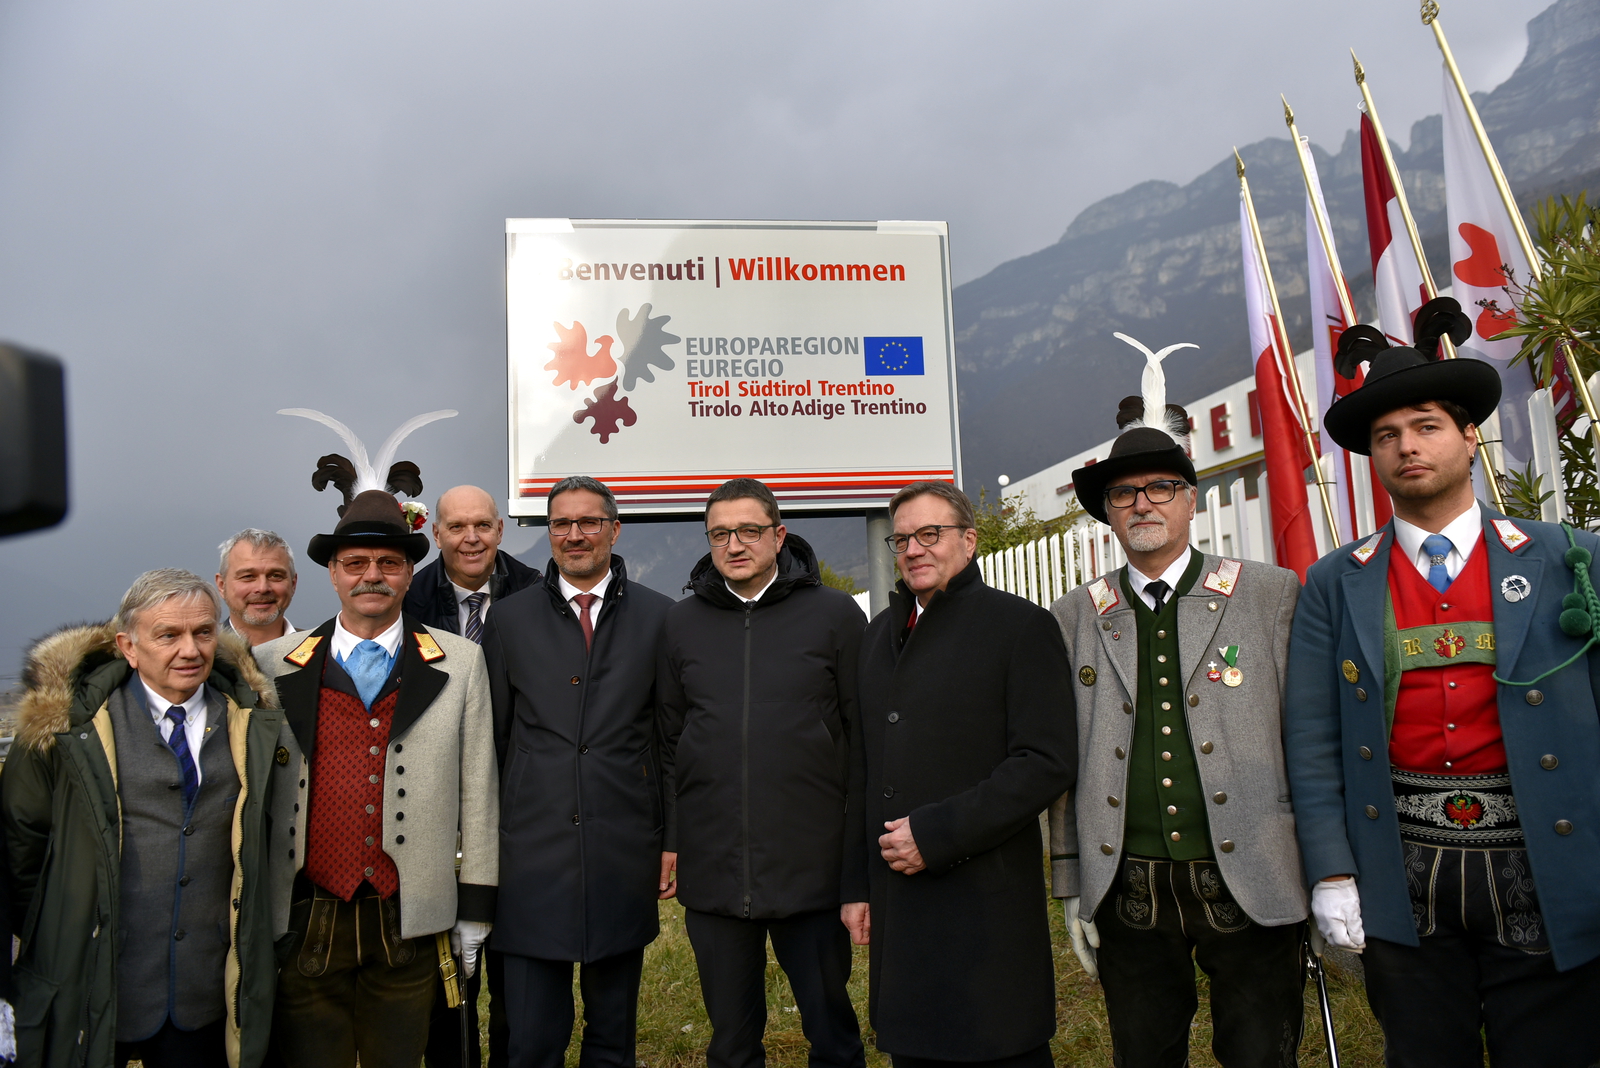 2020_02_19 Europaregion Tirol 42jpg